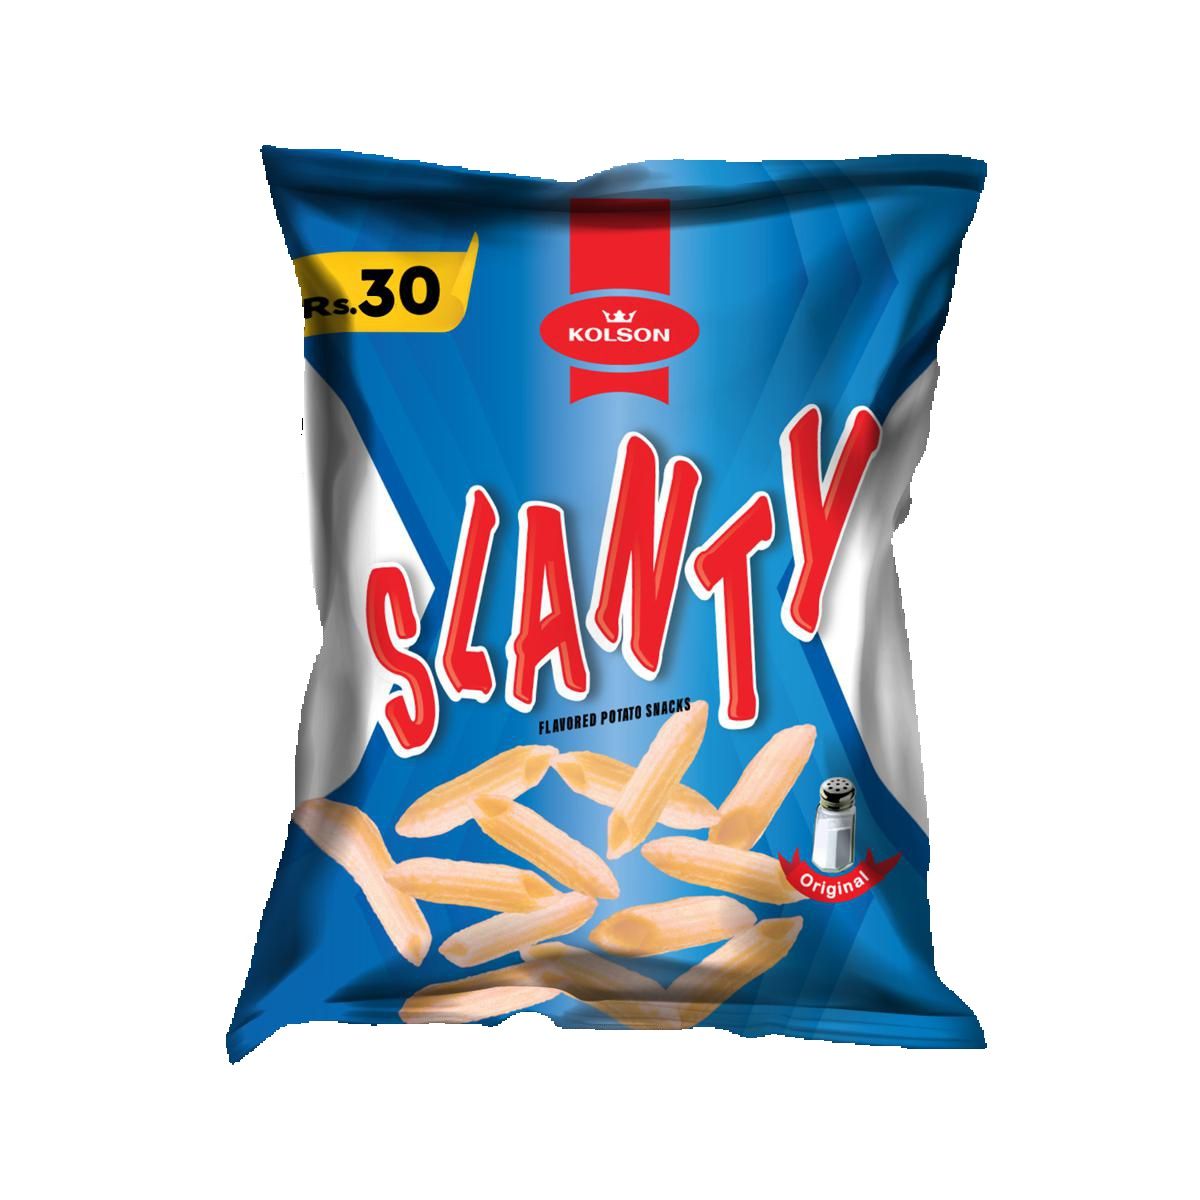 Kolson Slanty (plain Salted) - Rs30 (pack Of 48)